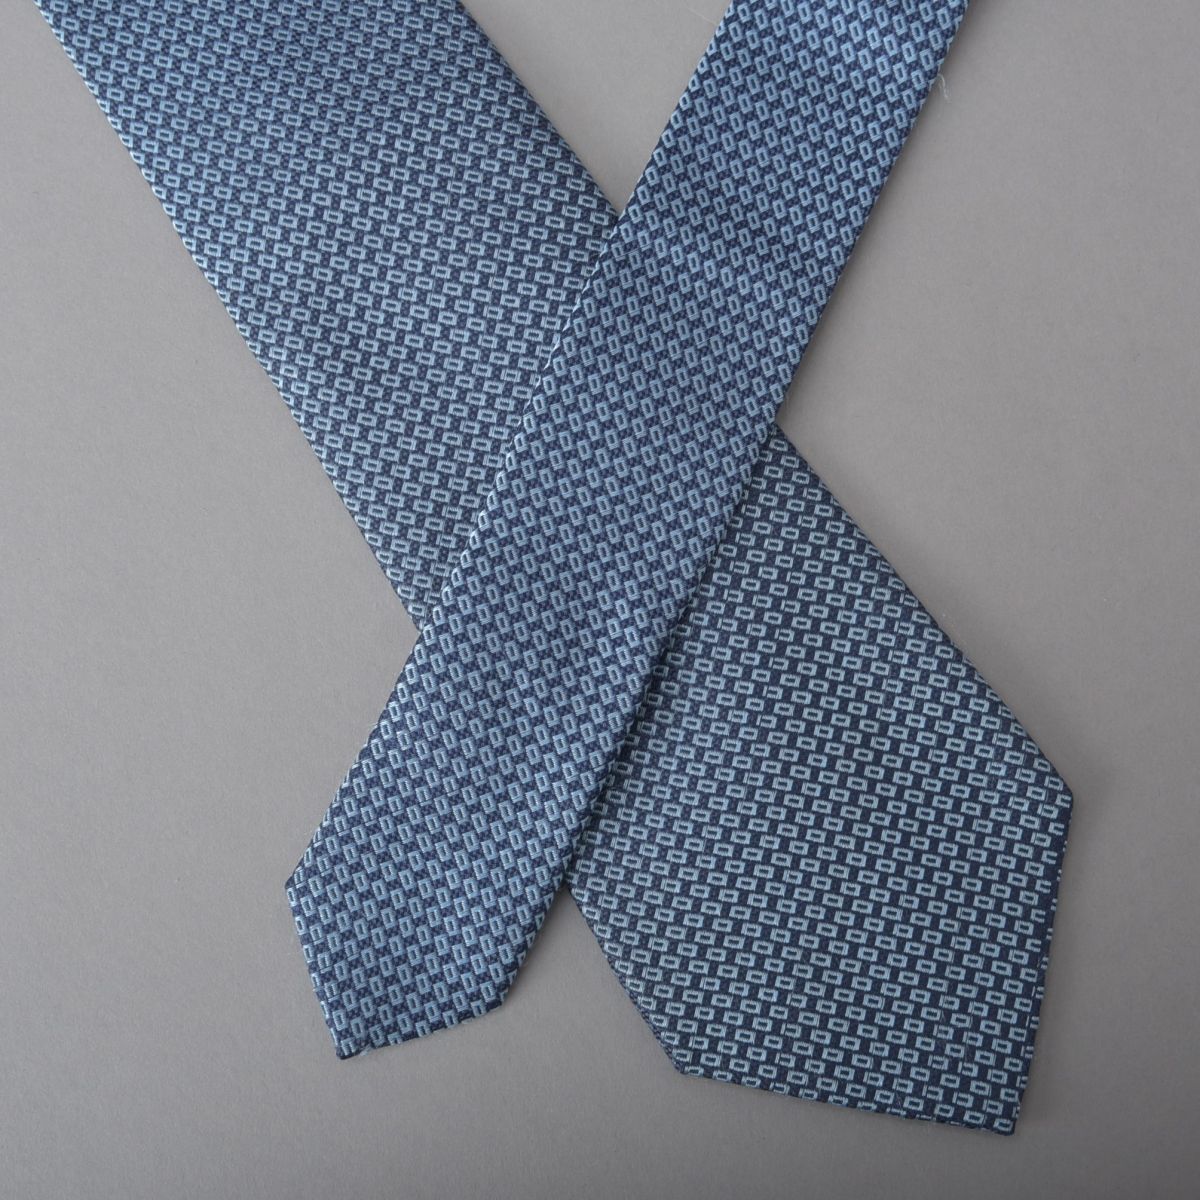  хорошая вещь joru geo Armani галстук rek tang ru шелк голубой темно-синий 4 квадратная форма общий рисунок бизнес джентльмен костюм ARMANI бренд *N69